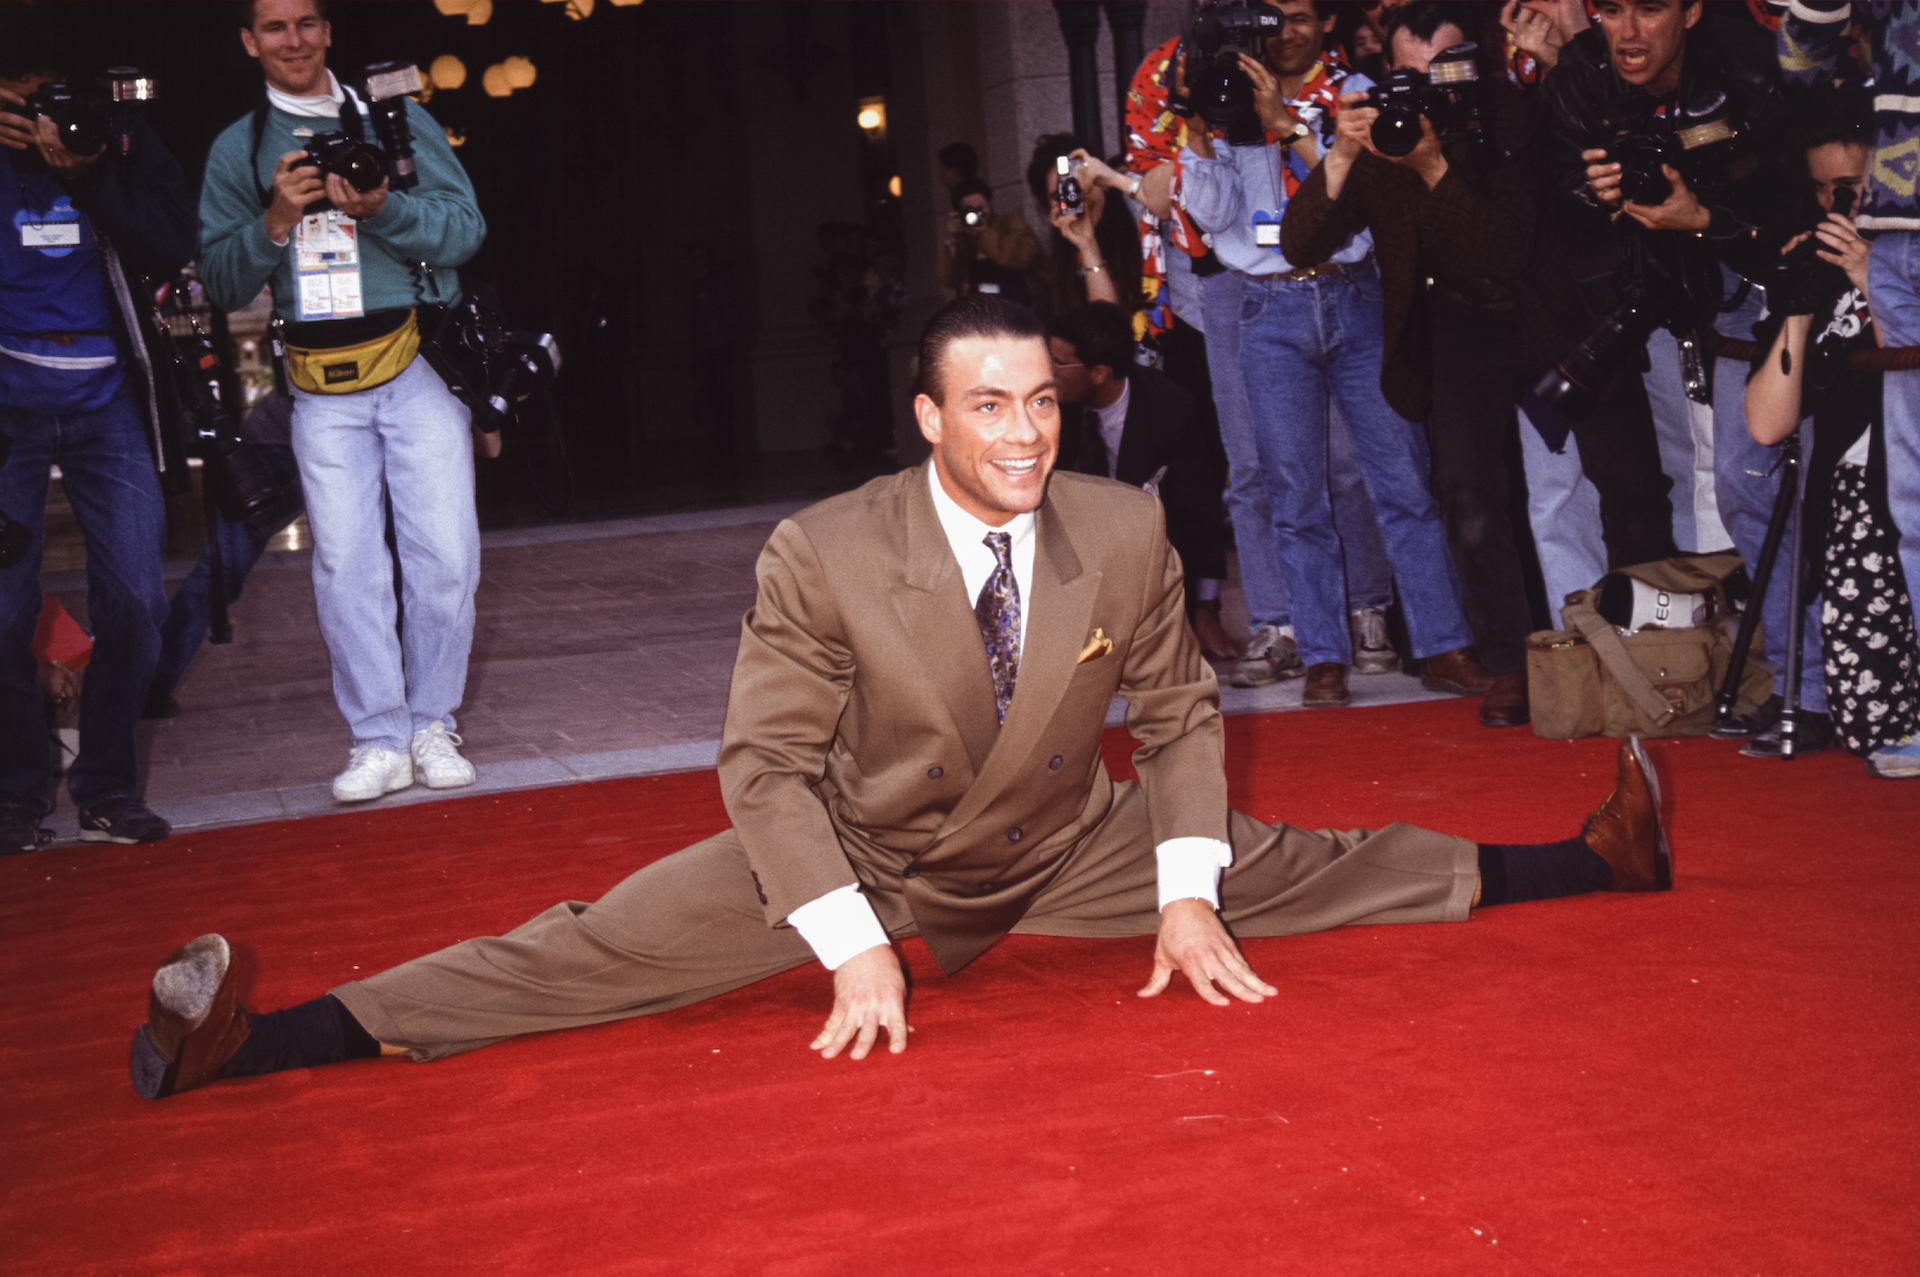 Jean-Claude Van Damme does a split on the red carpet at Disneyland Paris in 1992